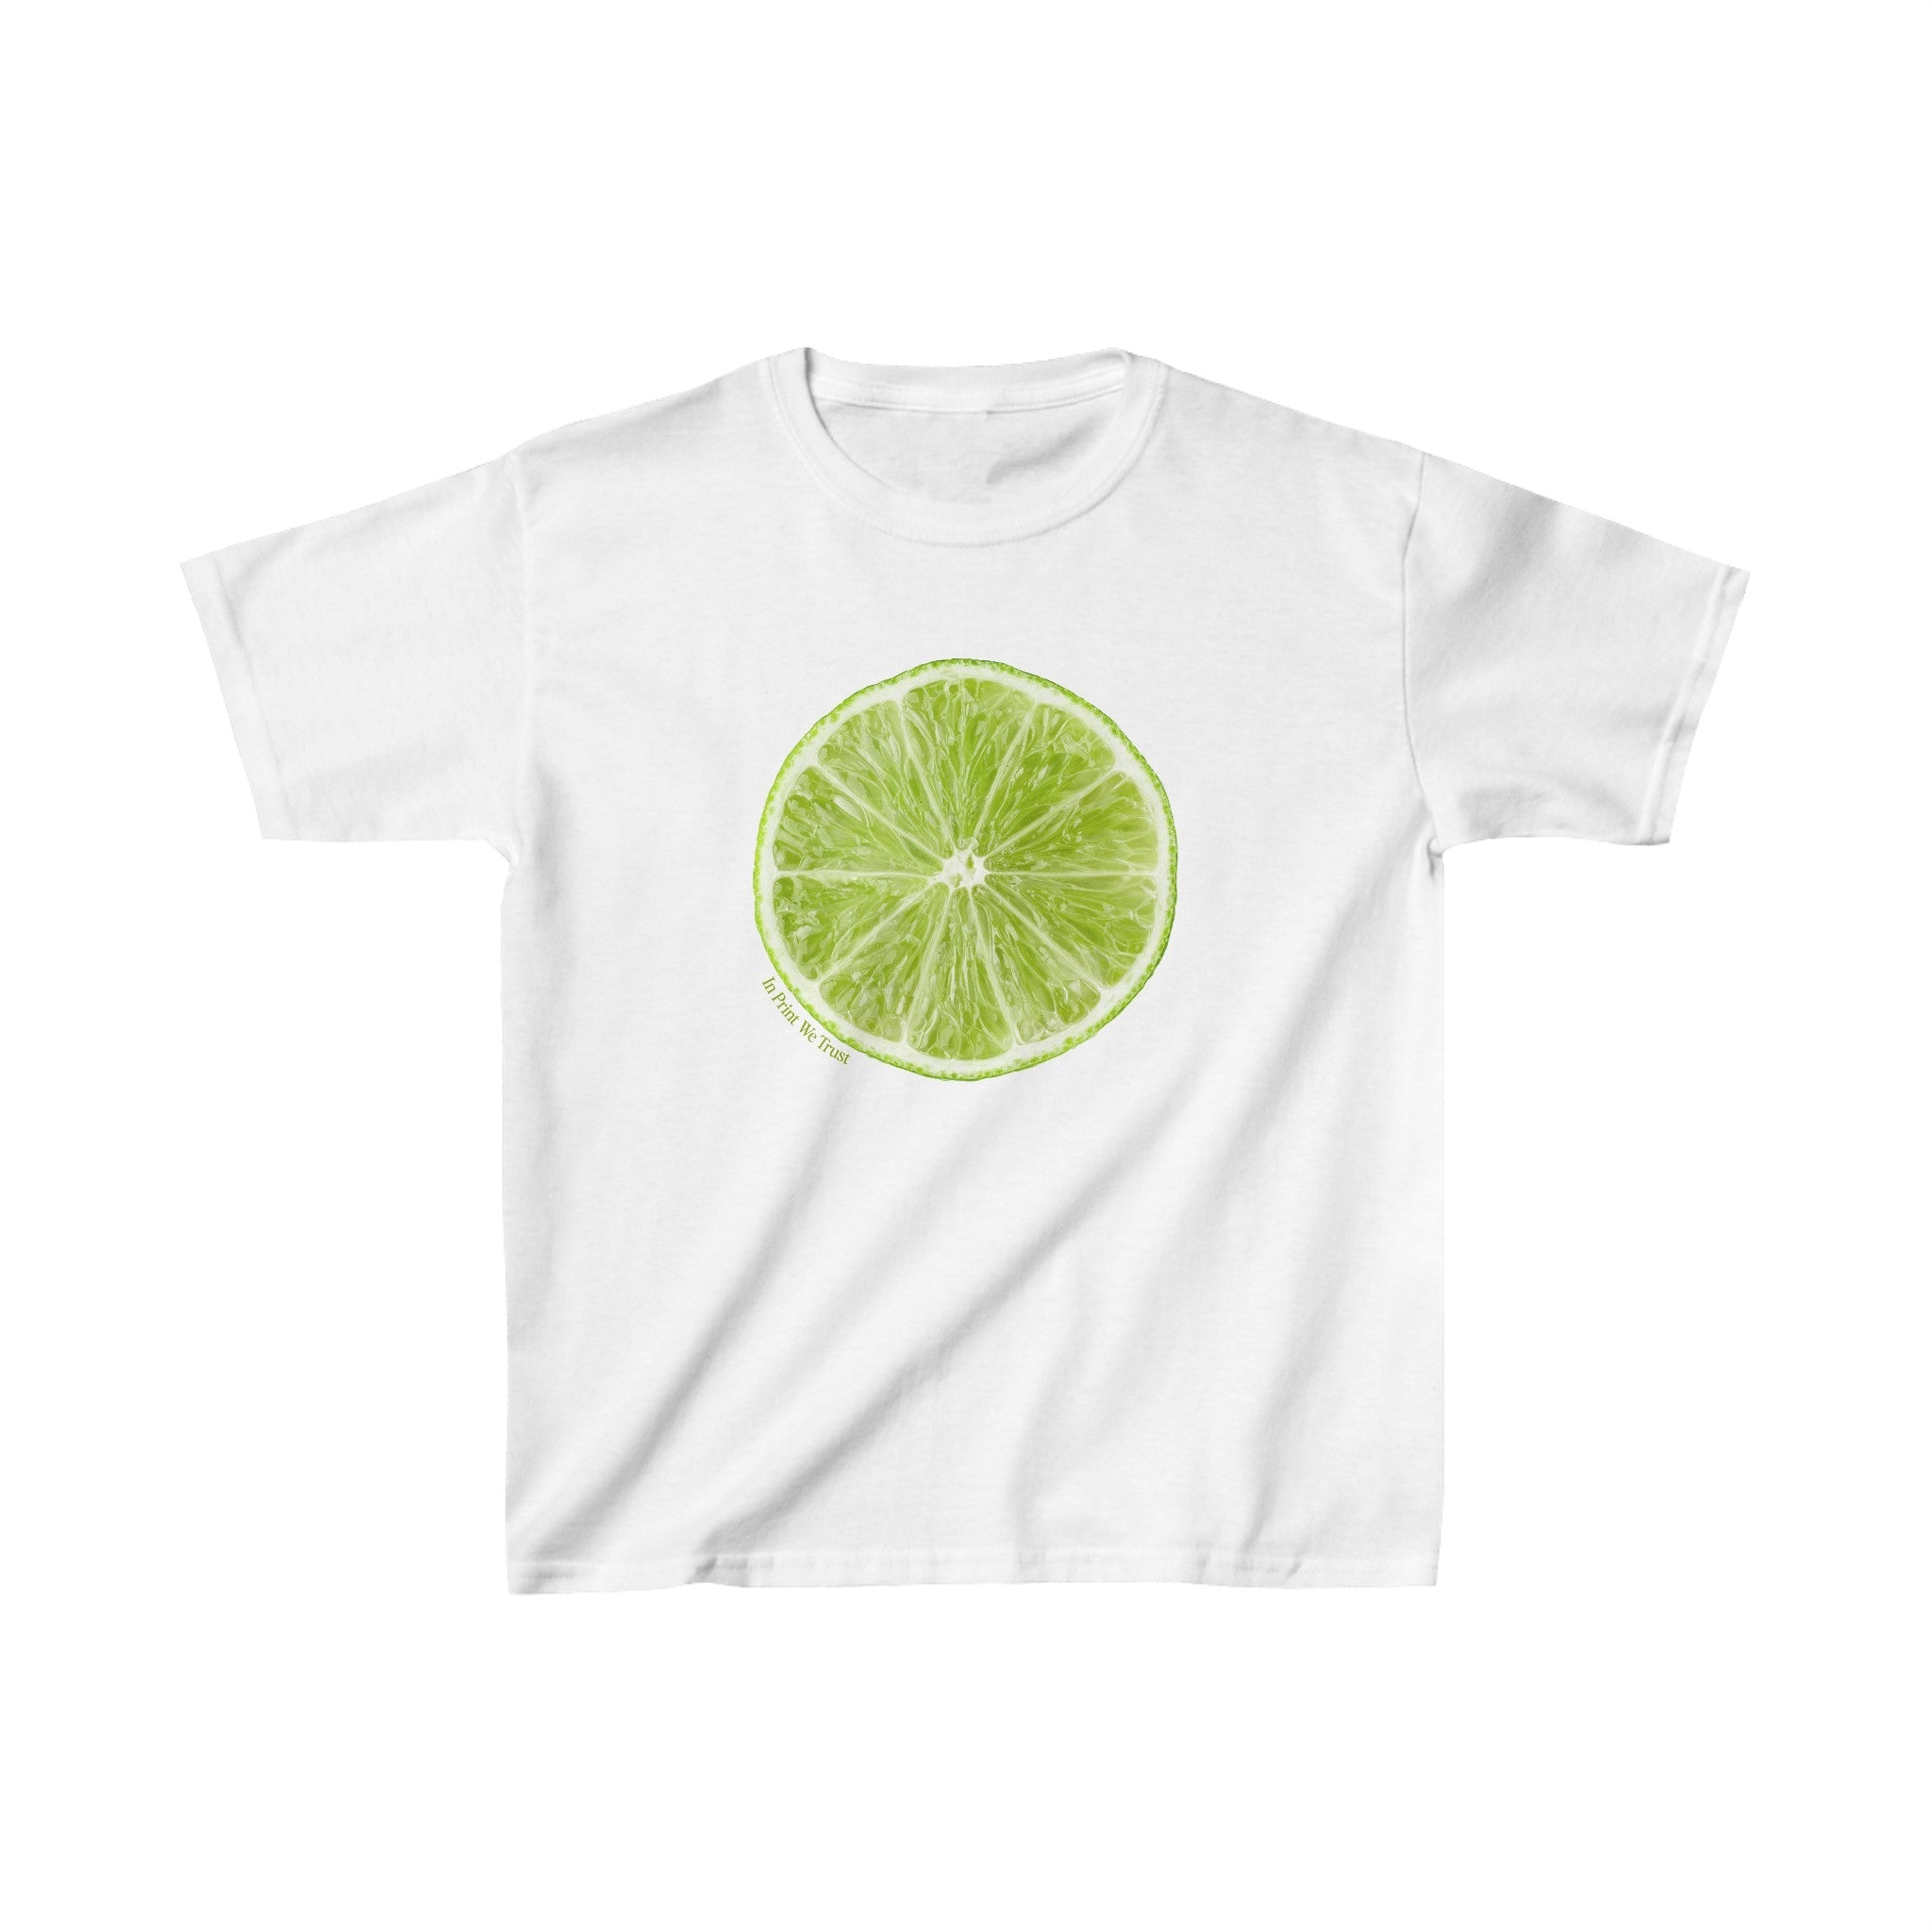 'Lime' baby tee - In Print We Trust